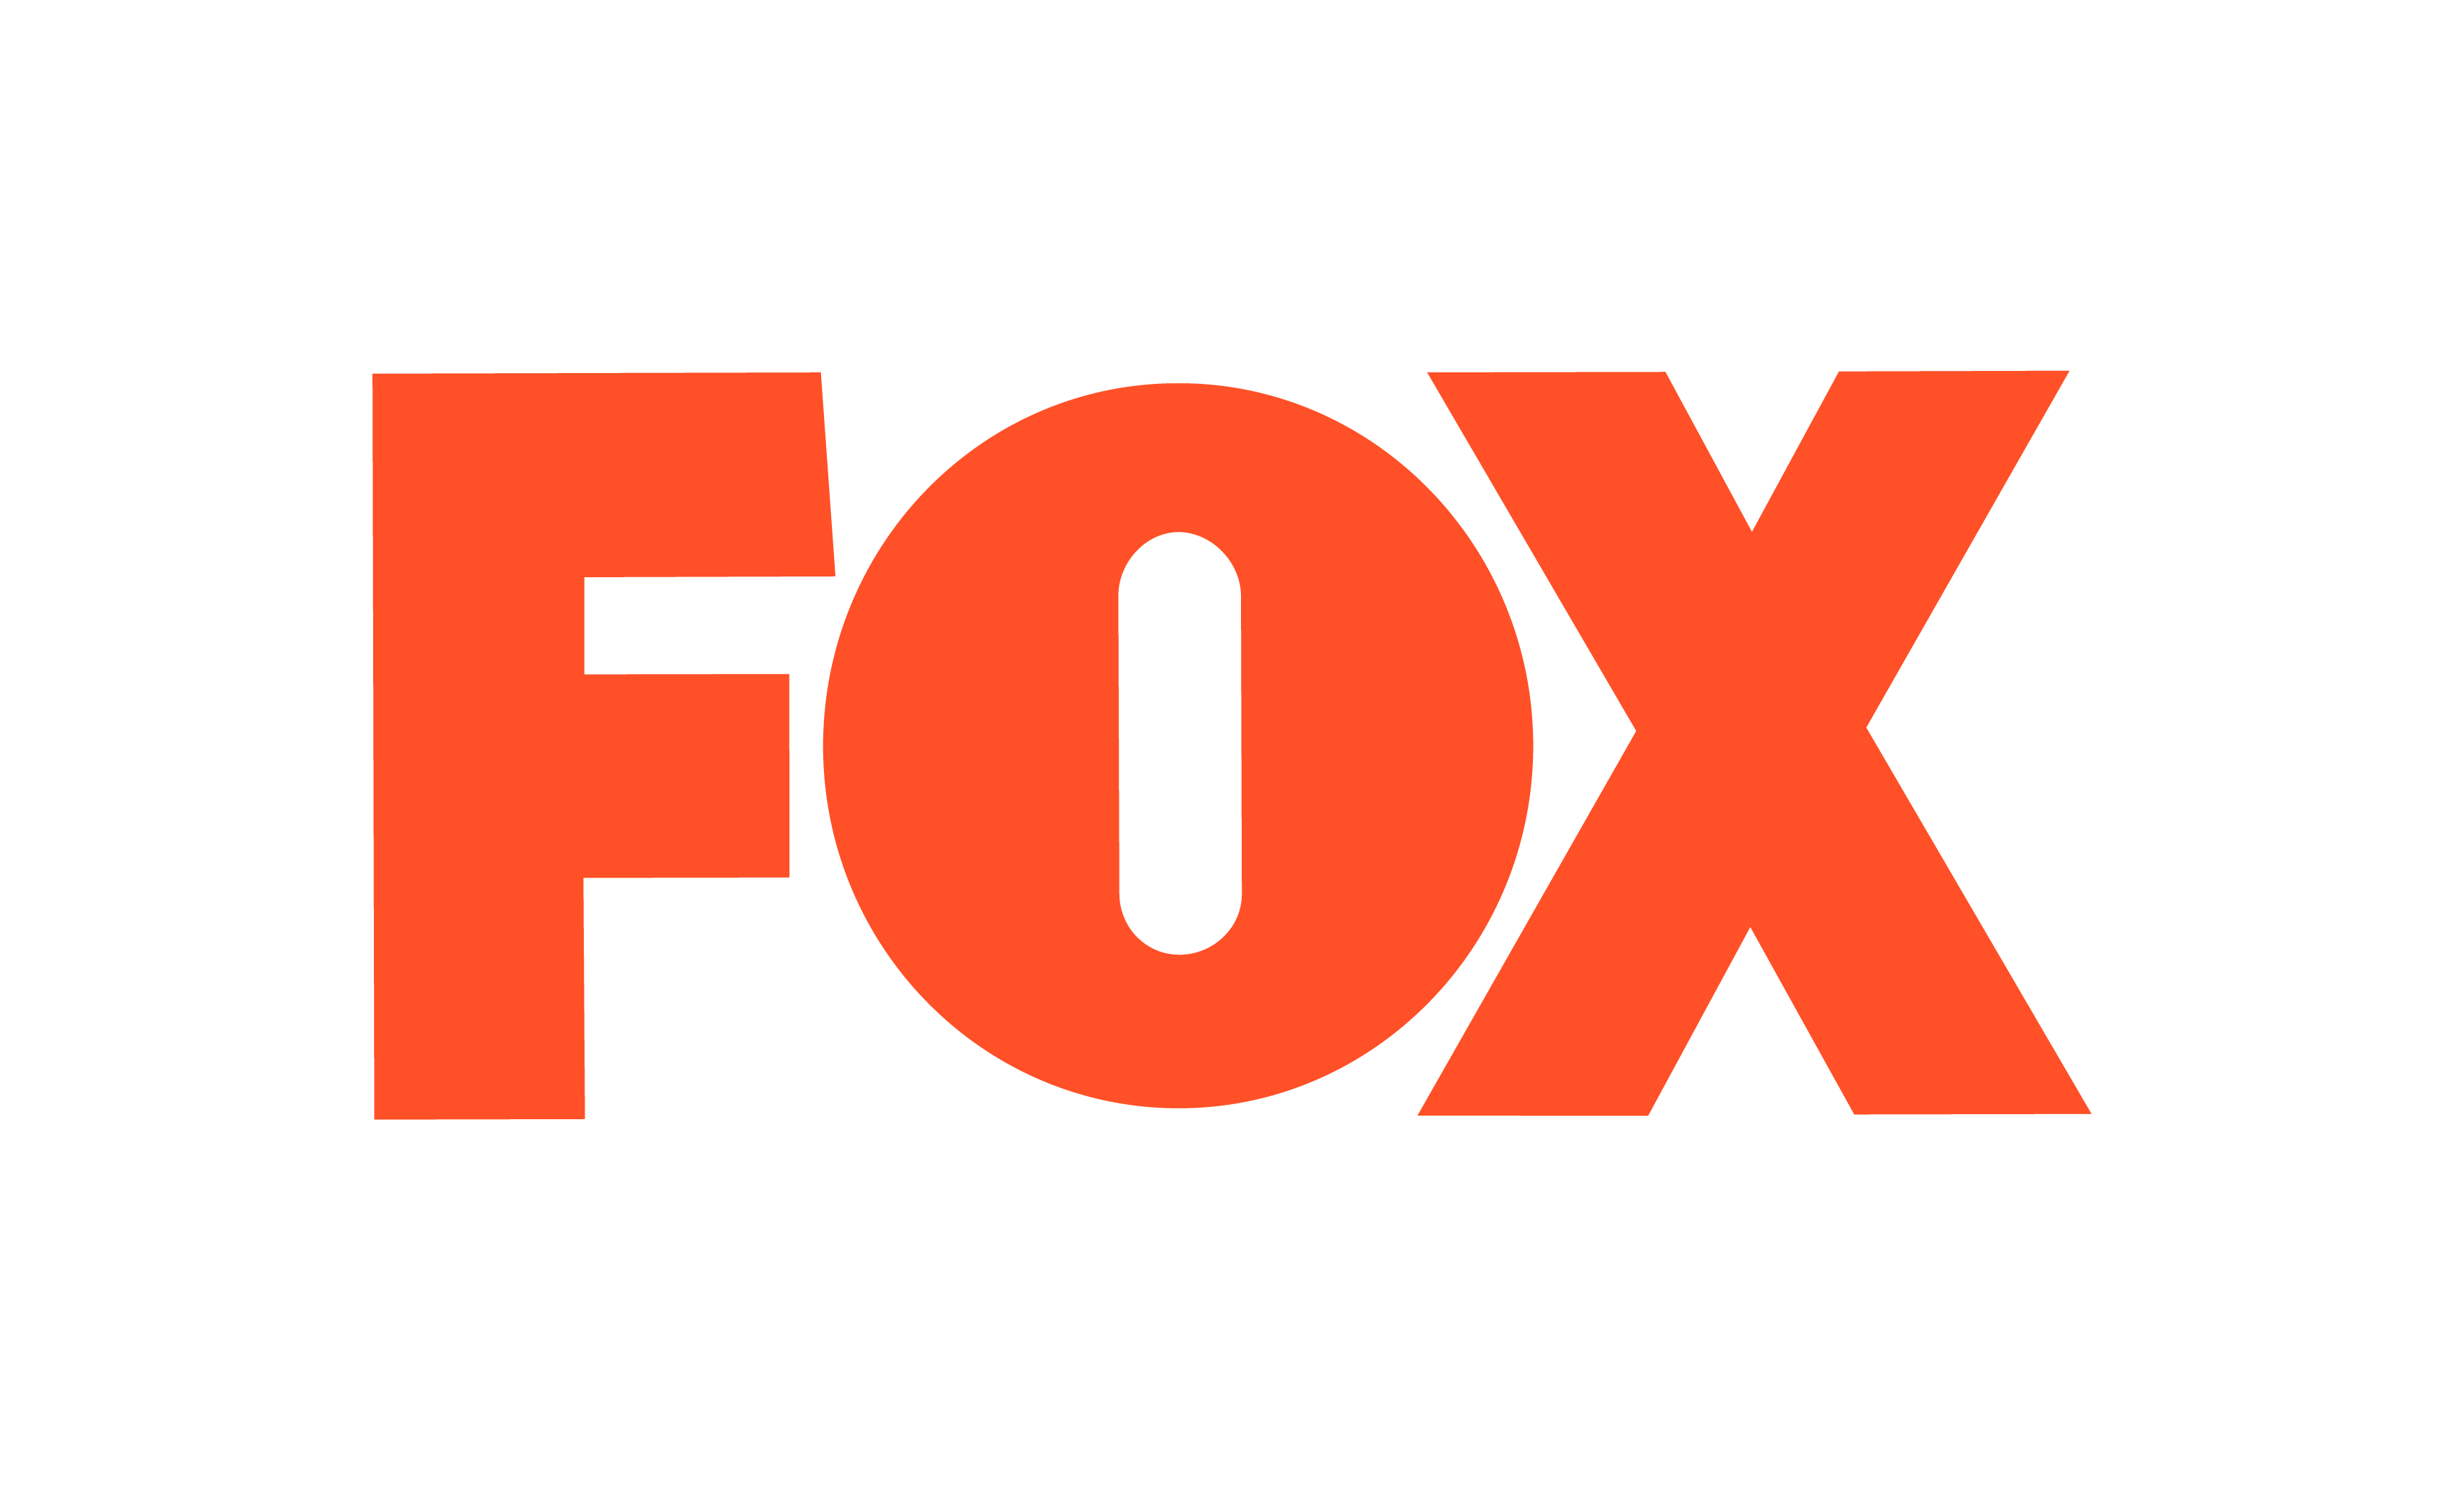 FOX ja National Geographic TV-kanavat 